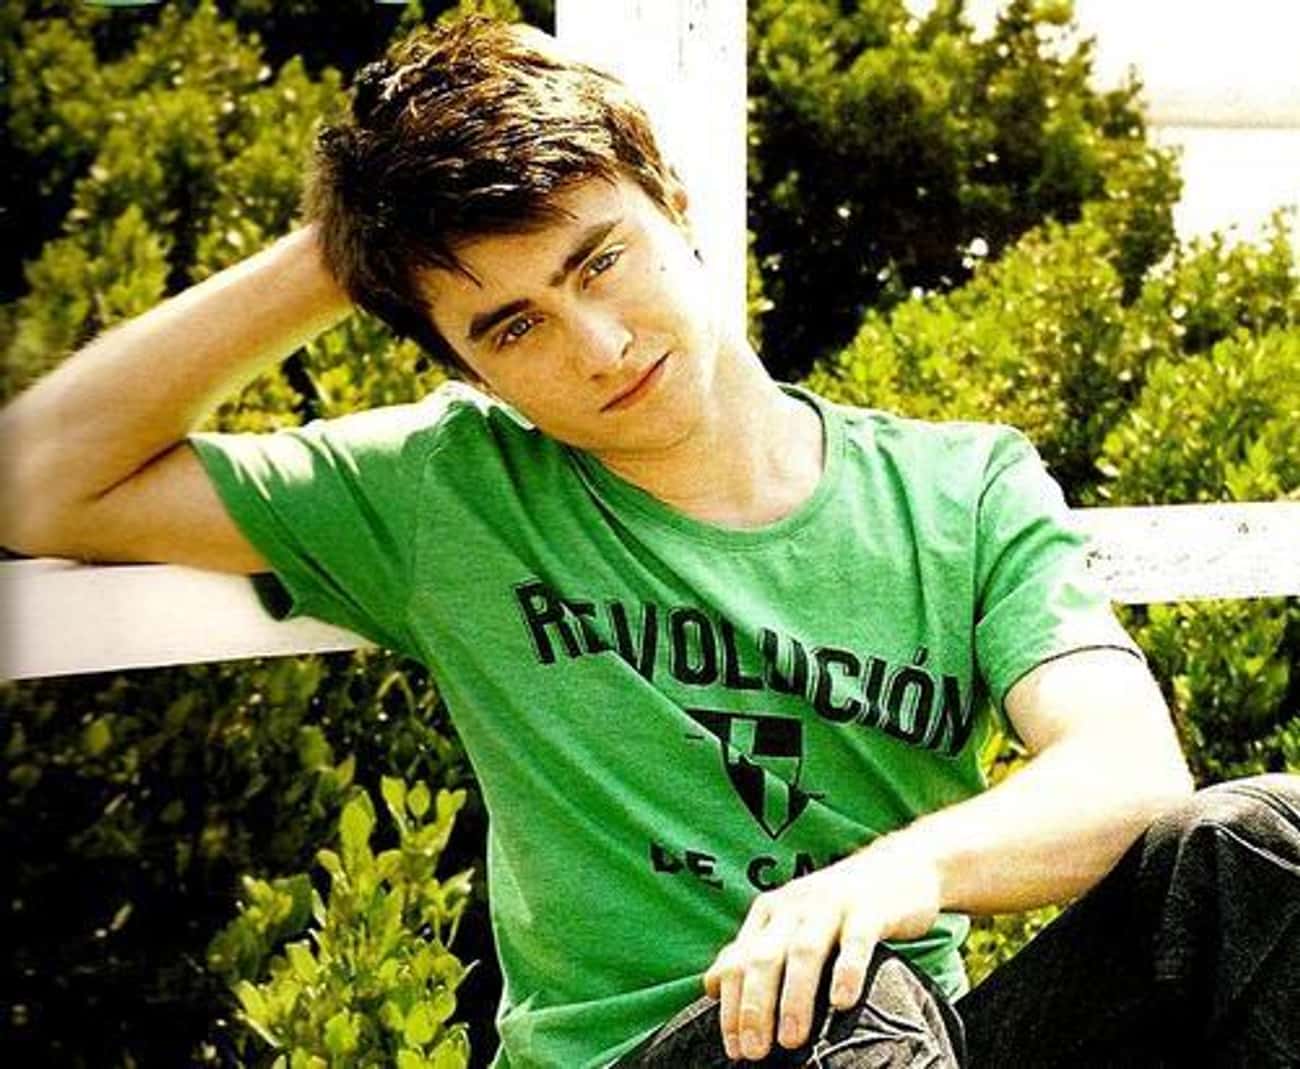 Daniel Radcliffe in Green Revolution T-Shirt